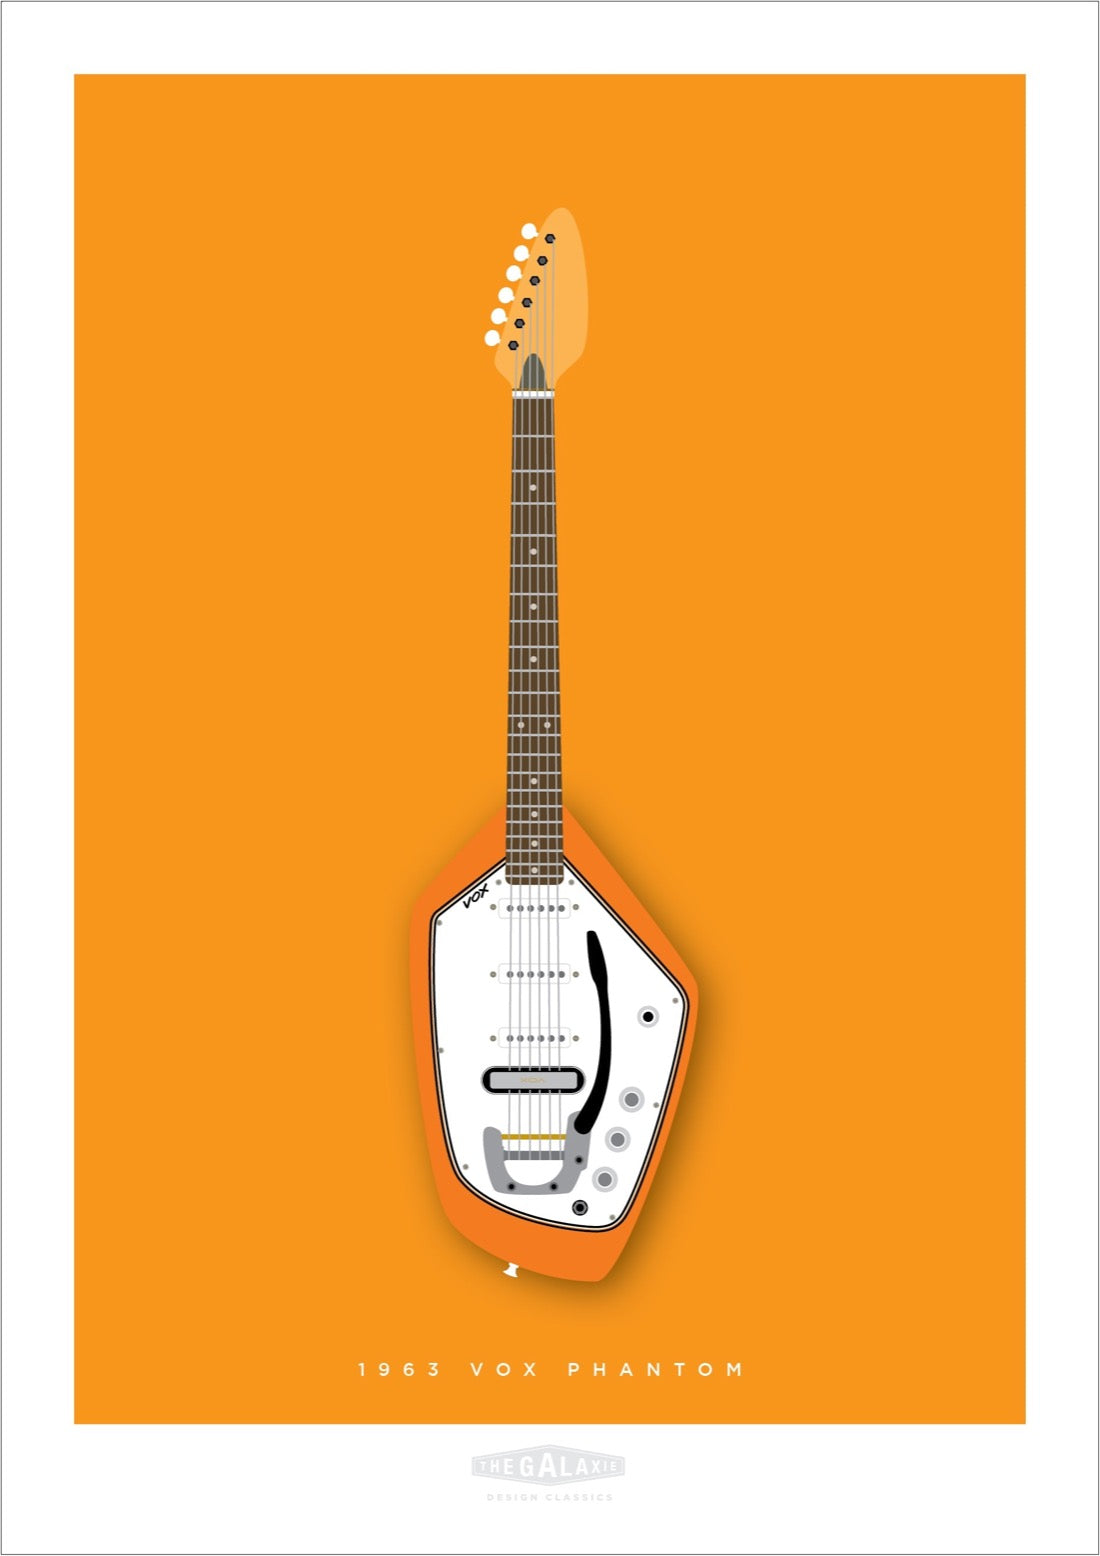 An original hand drawn print of a funky orange 1963 Vox Phantom guitar on an orange background.